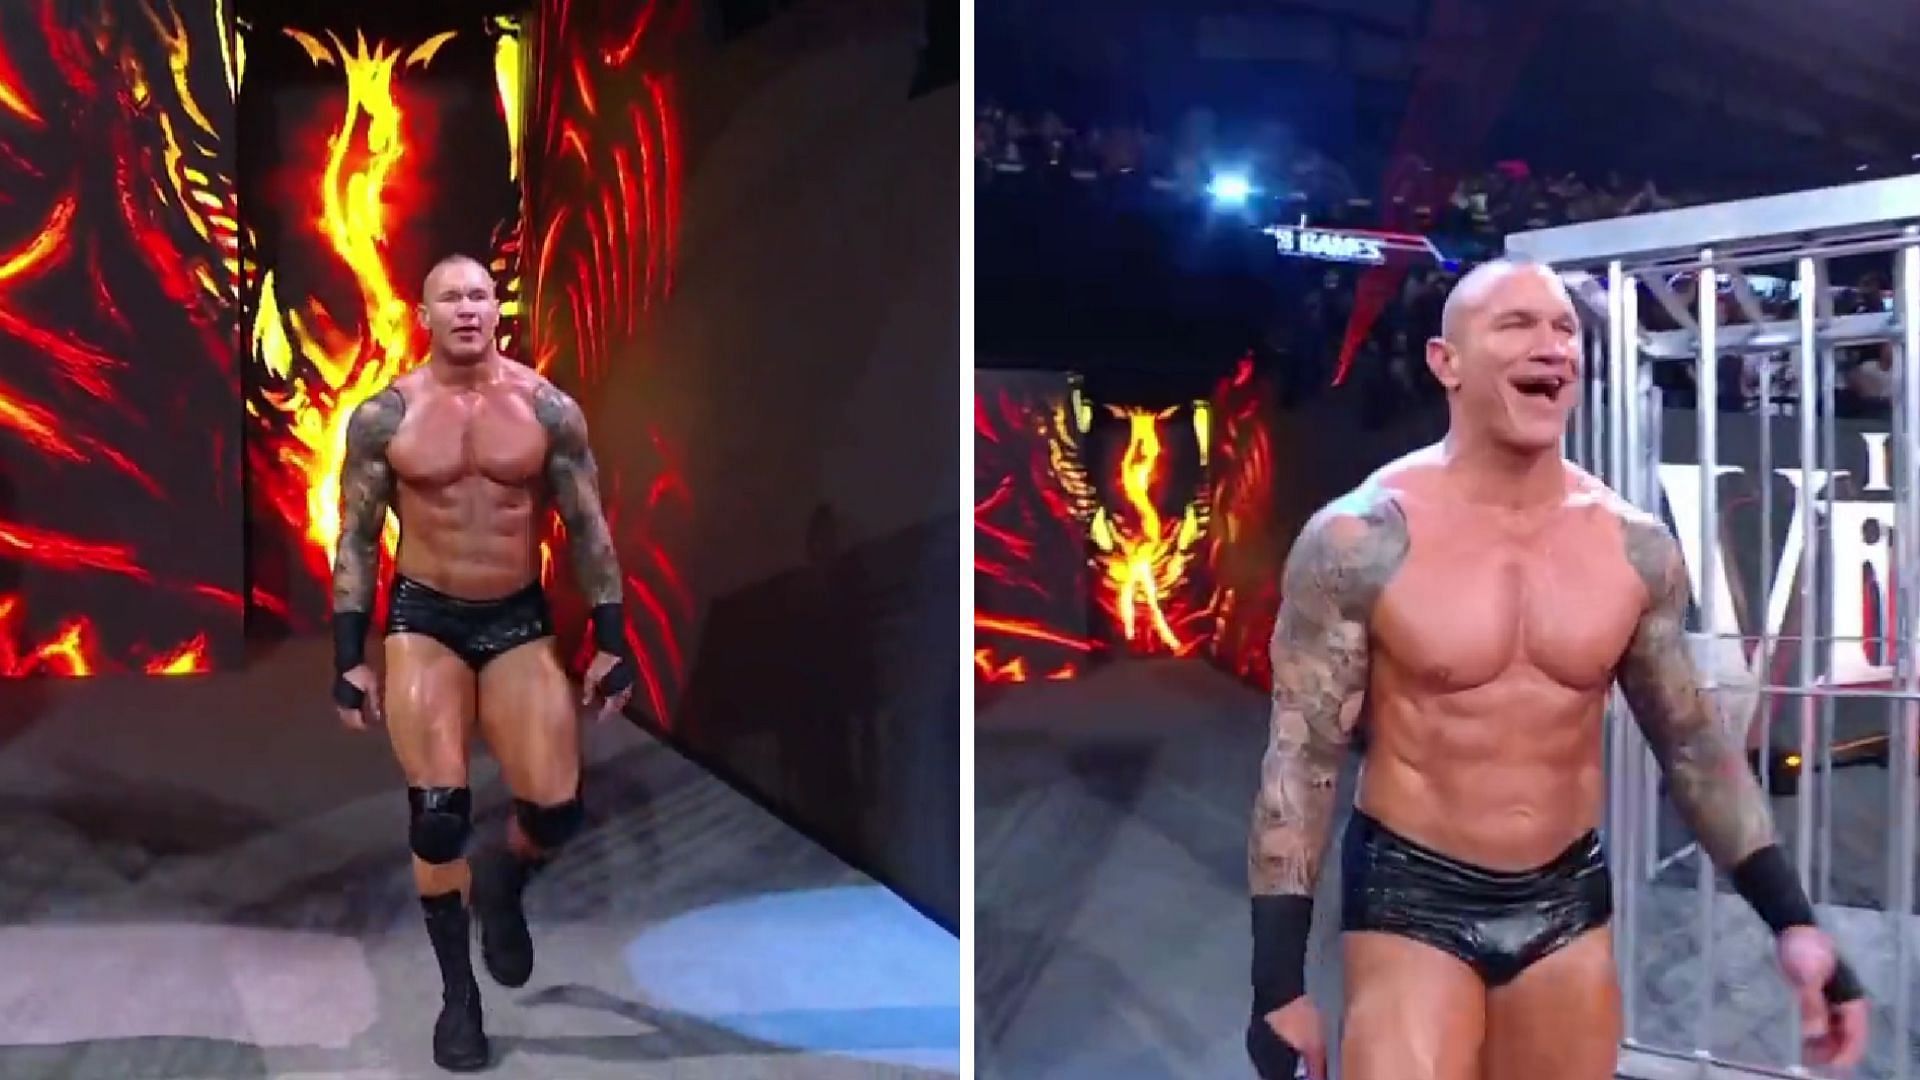 Randy Orton is a 20-time WWE champion